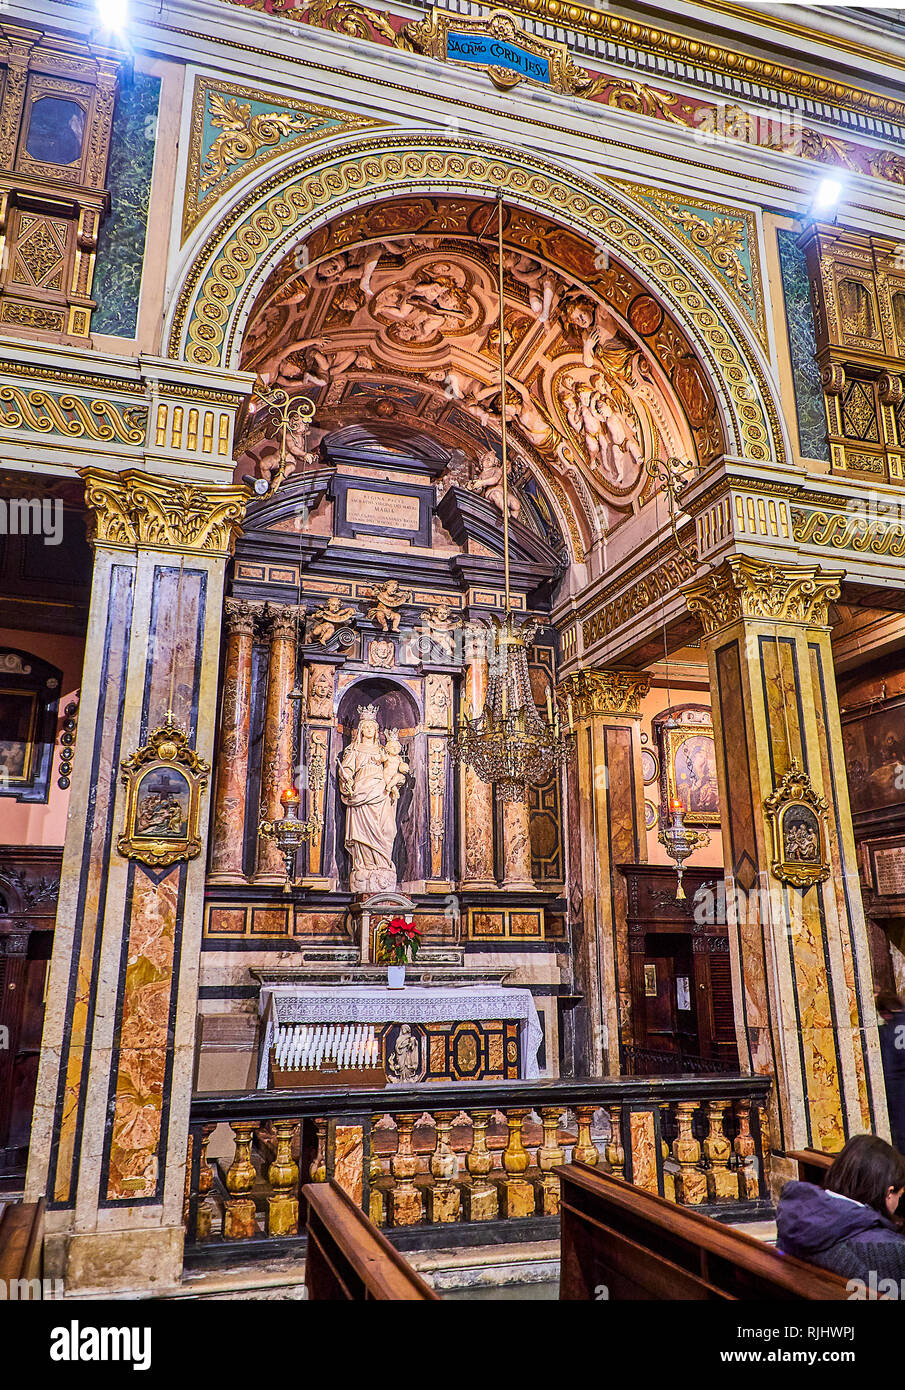 Seitliche Kapelle der Madonna della Pace (Unsere Liebe Frau des Friedens) der Chiesa di San Carlo Borromeo Kirche. Turin, Piemont, Italien. Stockfoto